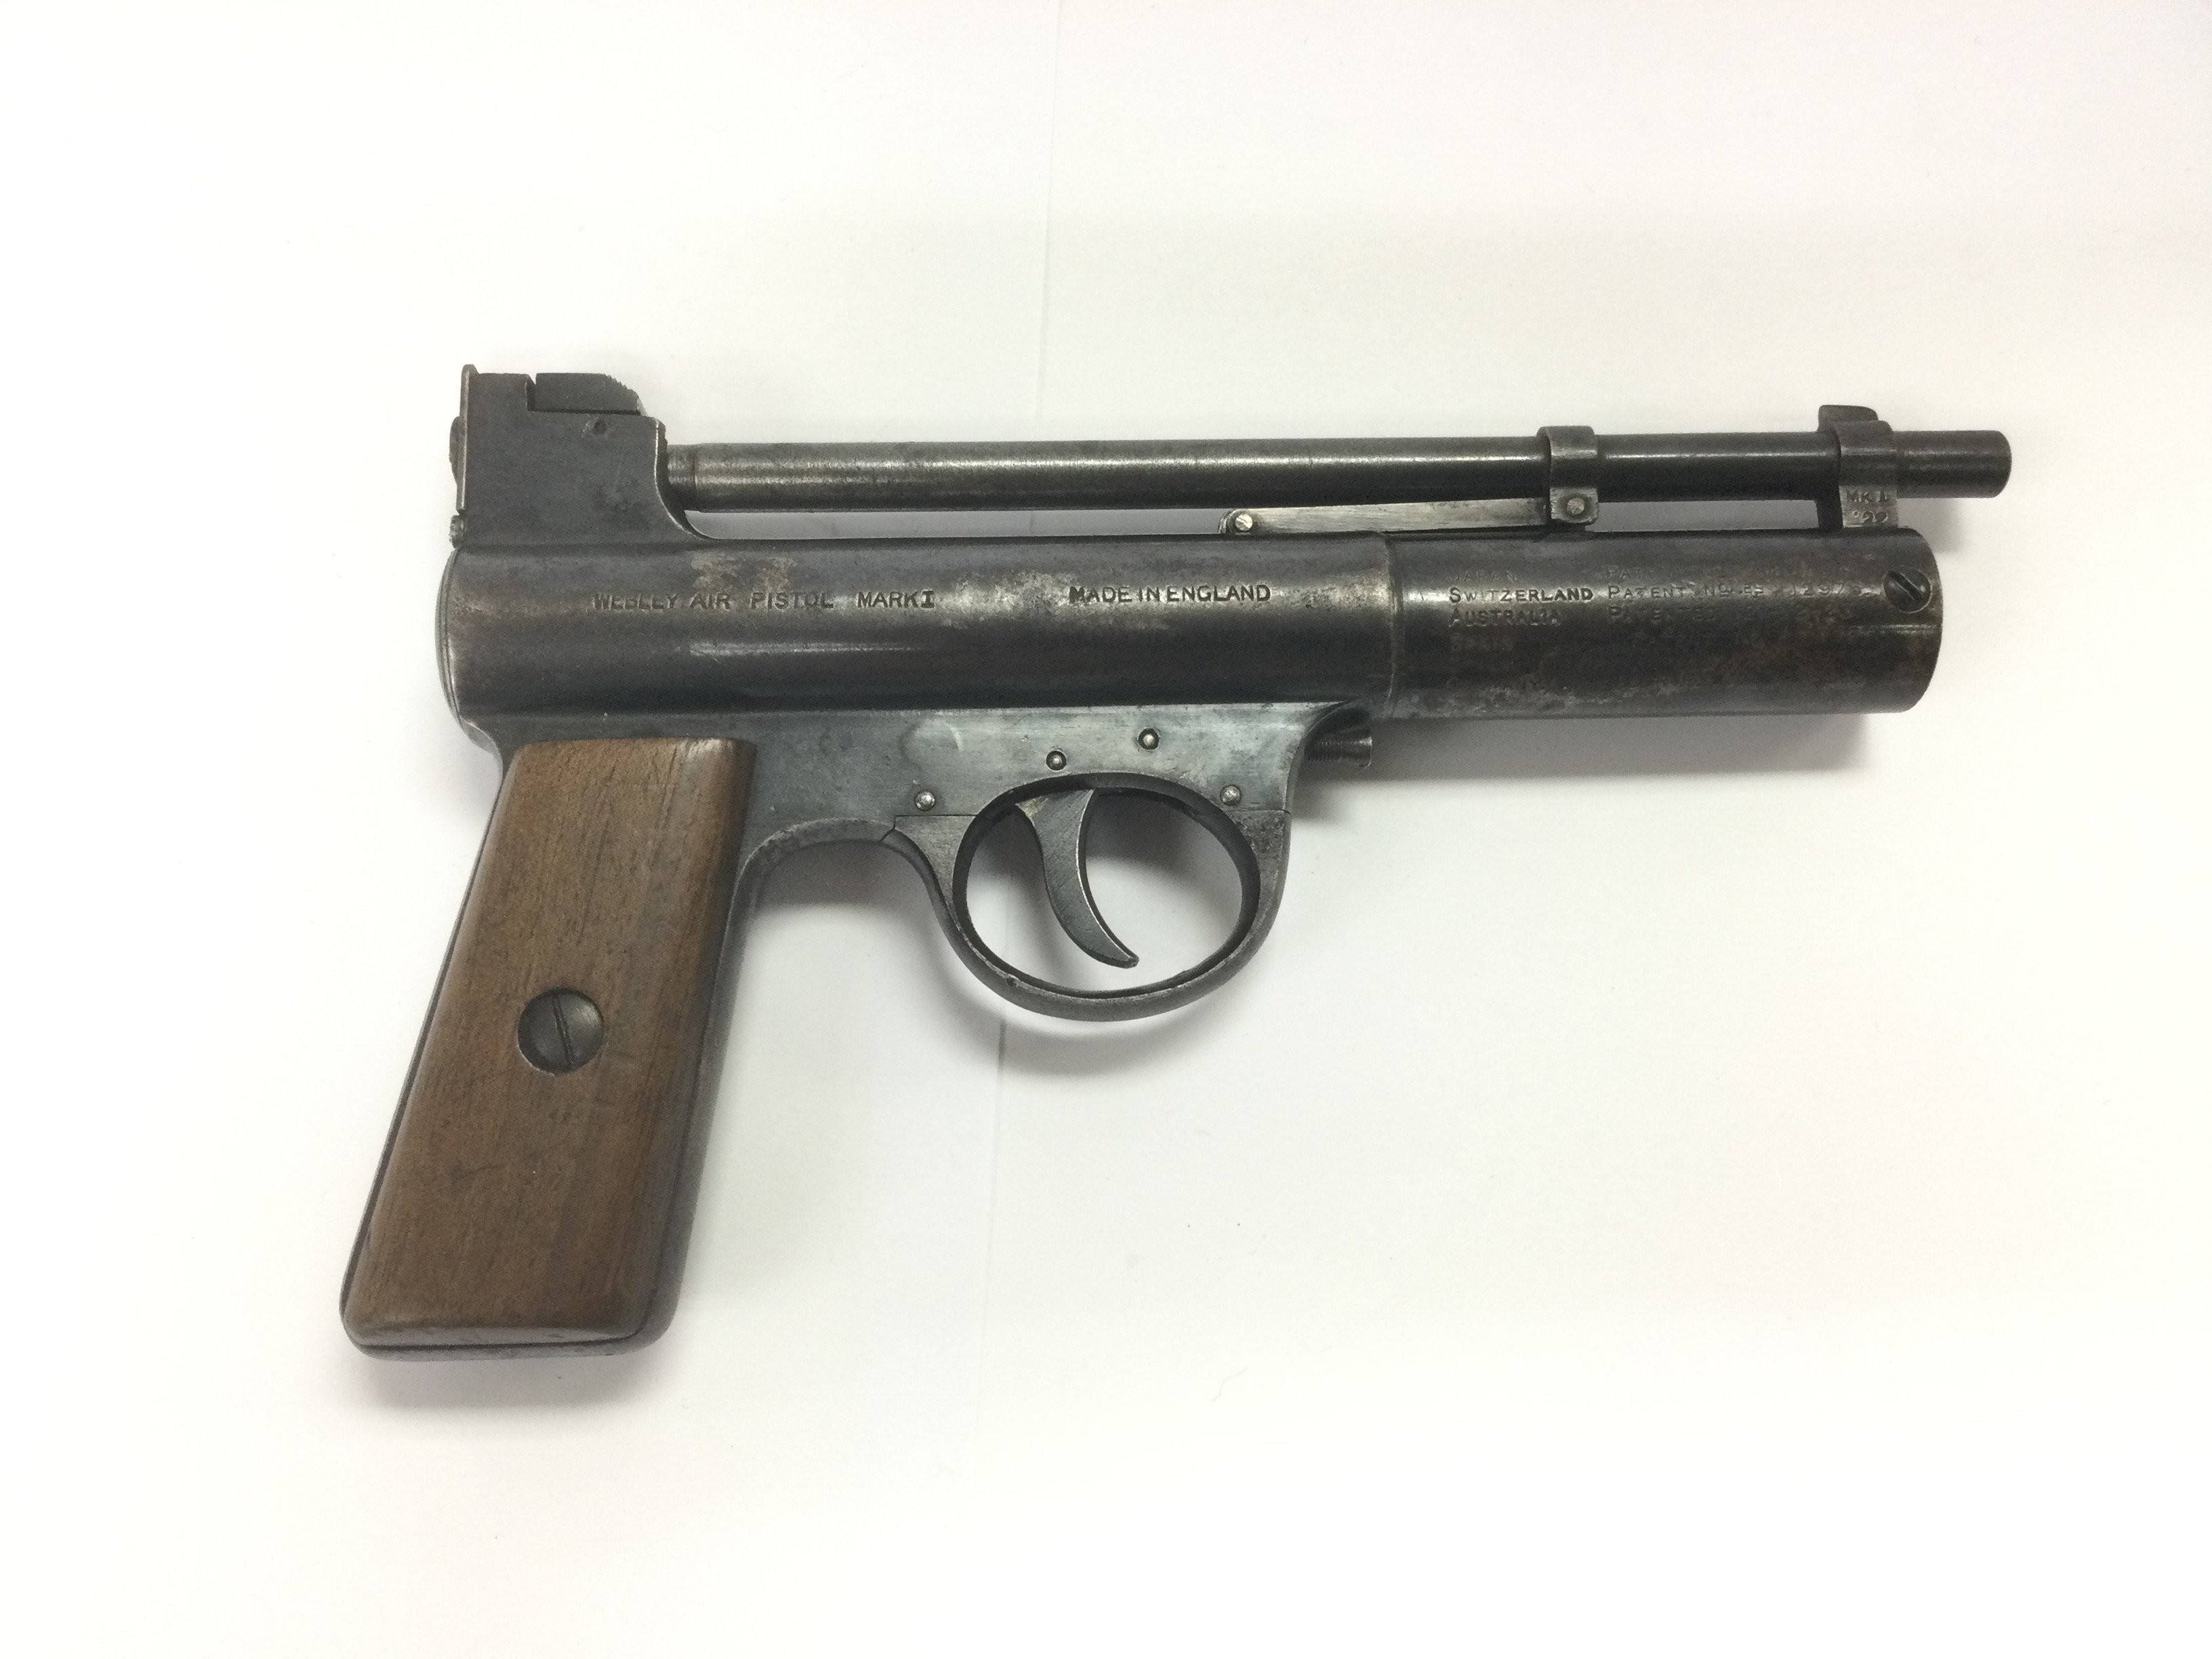 A Webley & Scott Mk 1 pistol. - Image 2 of 2